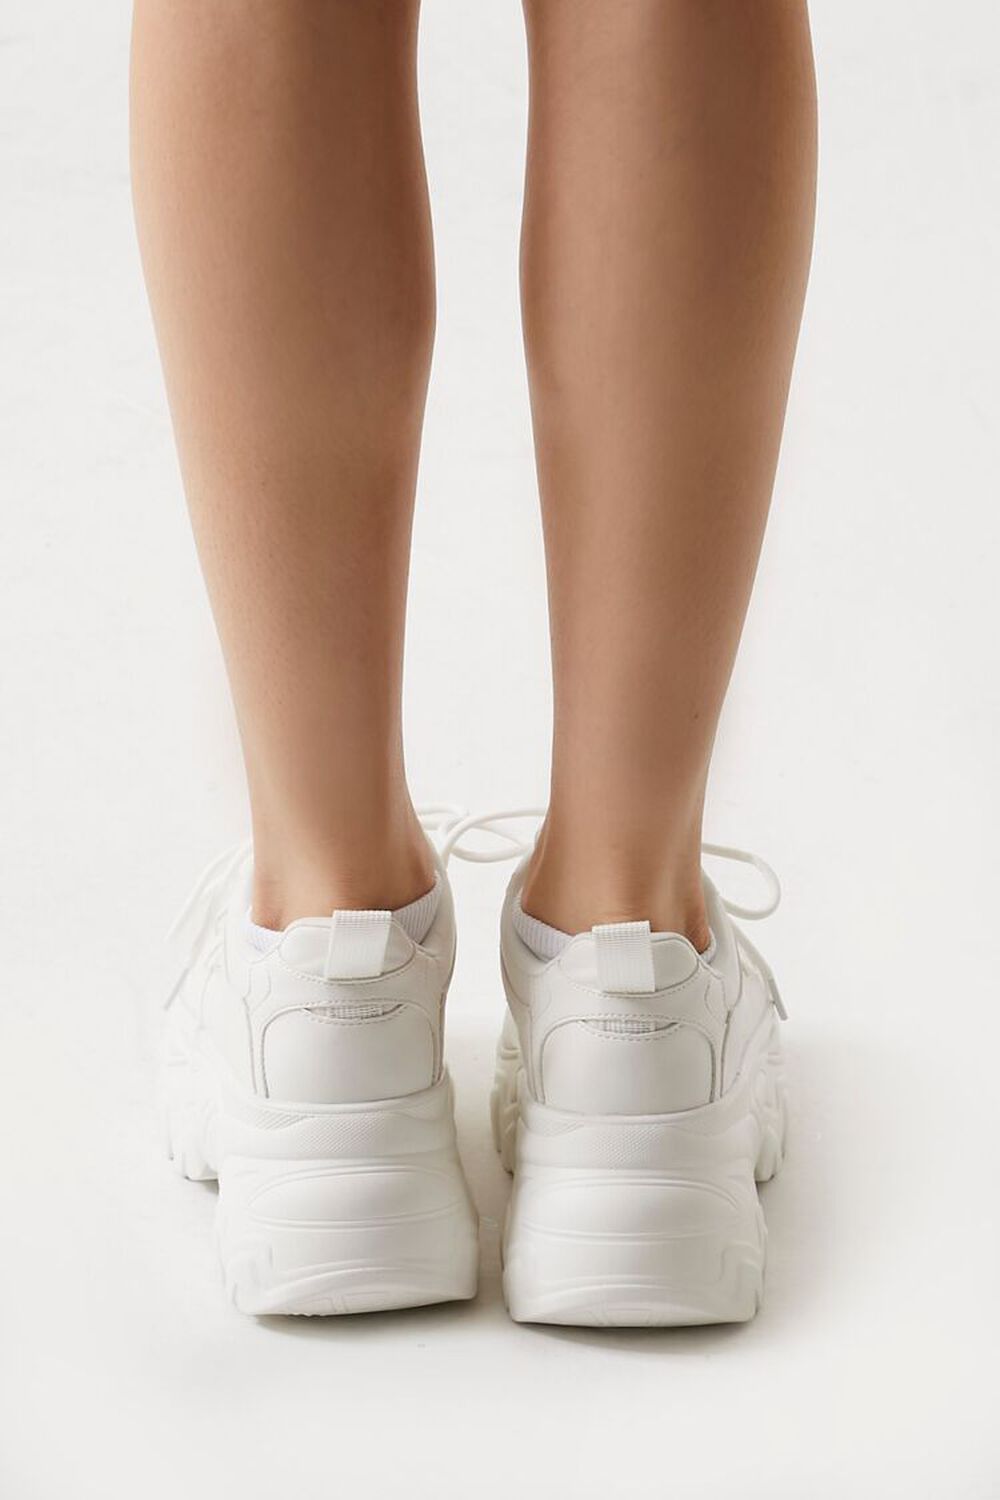 WHITE Chunky Platform Sneakers, image 3